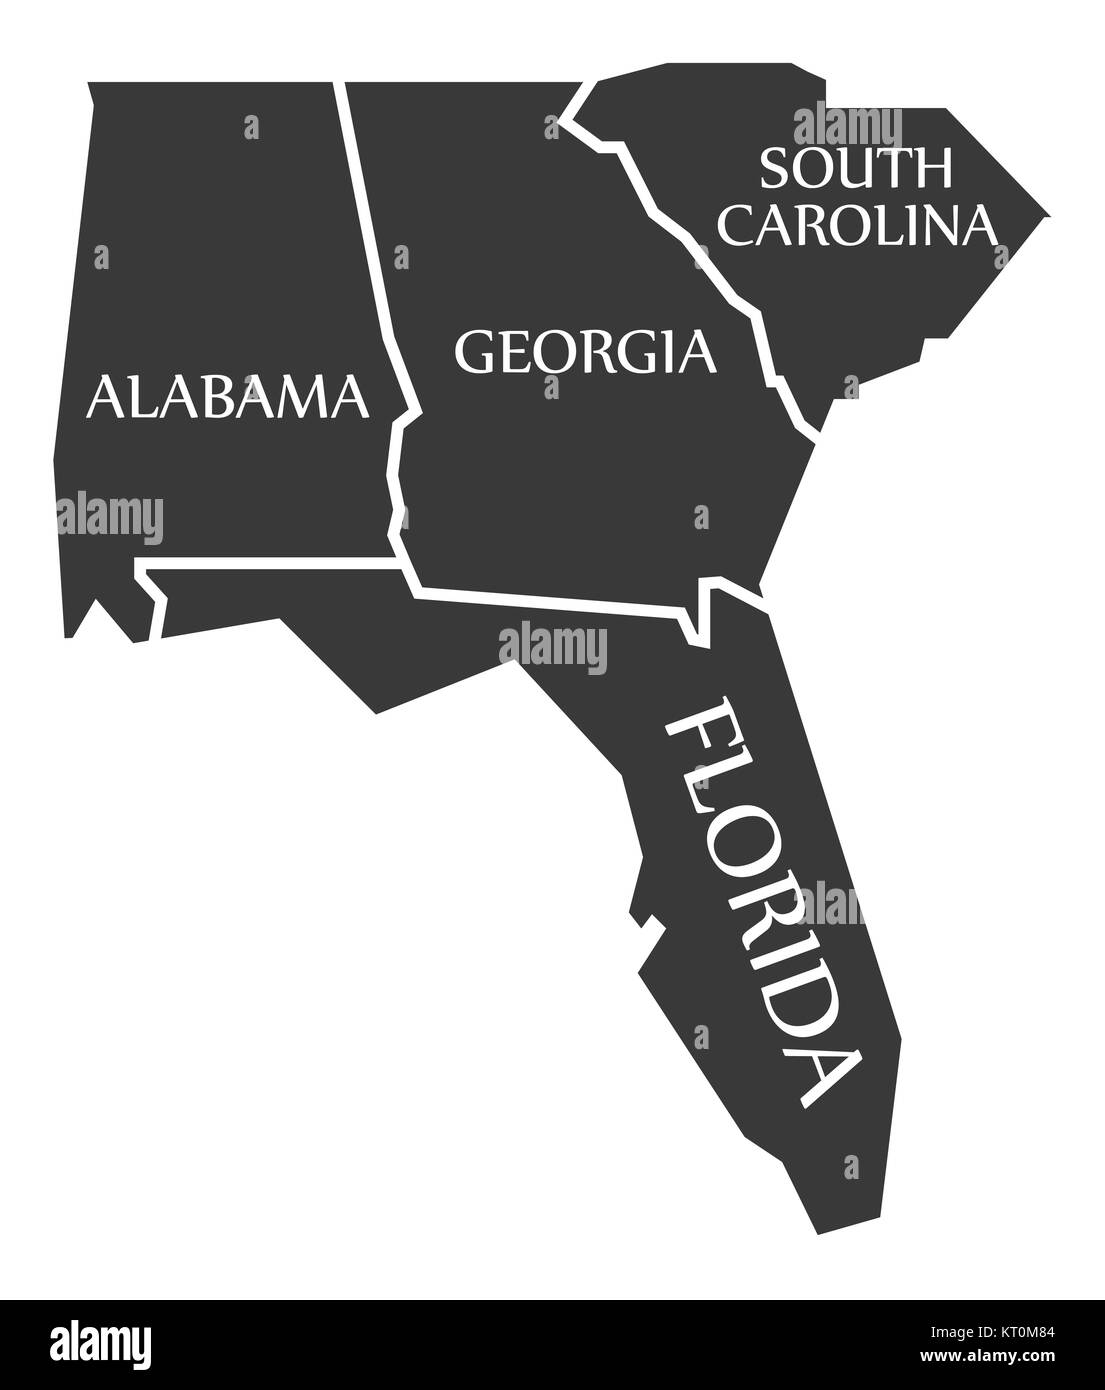 Alabama - Georgia - Carolina del Sud - Florida Mappa nero marcato Foto Stock